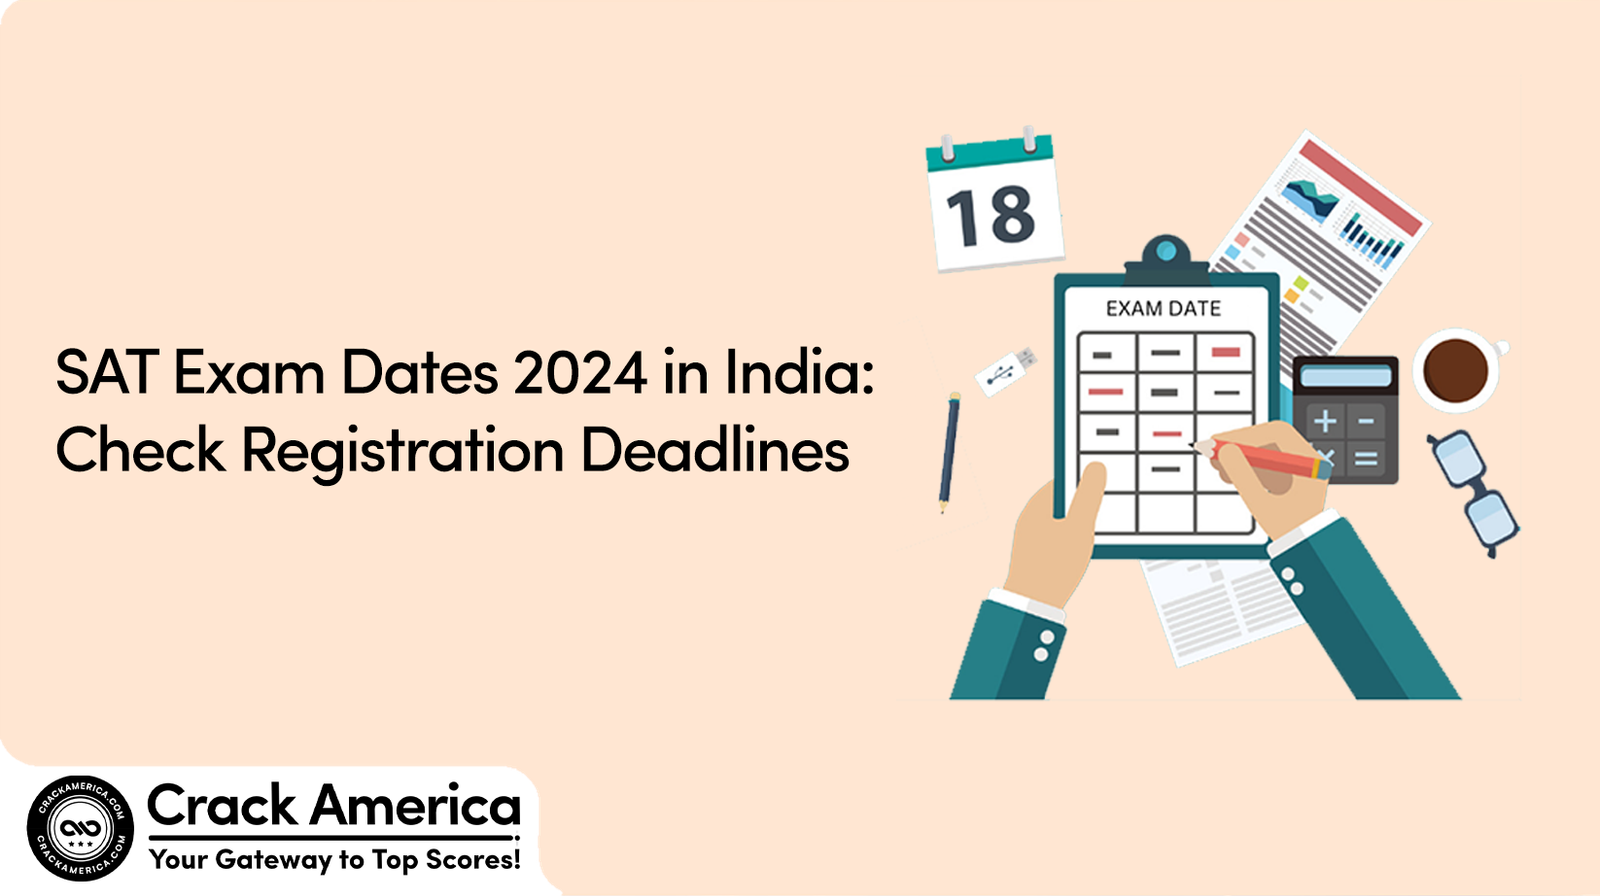 SAT Exam Dates 2024 in India Check Registration Deadlines CrackAmerica